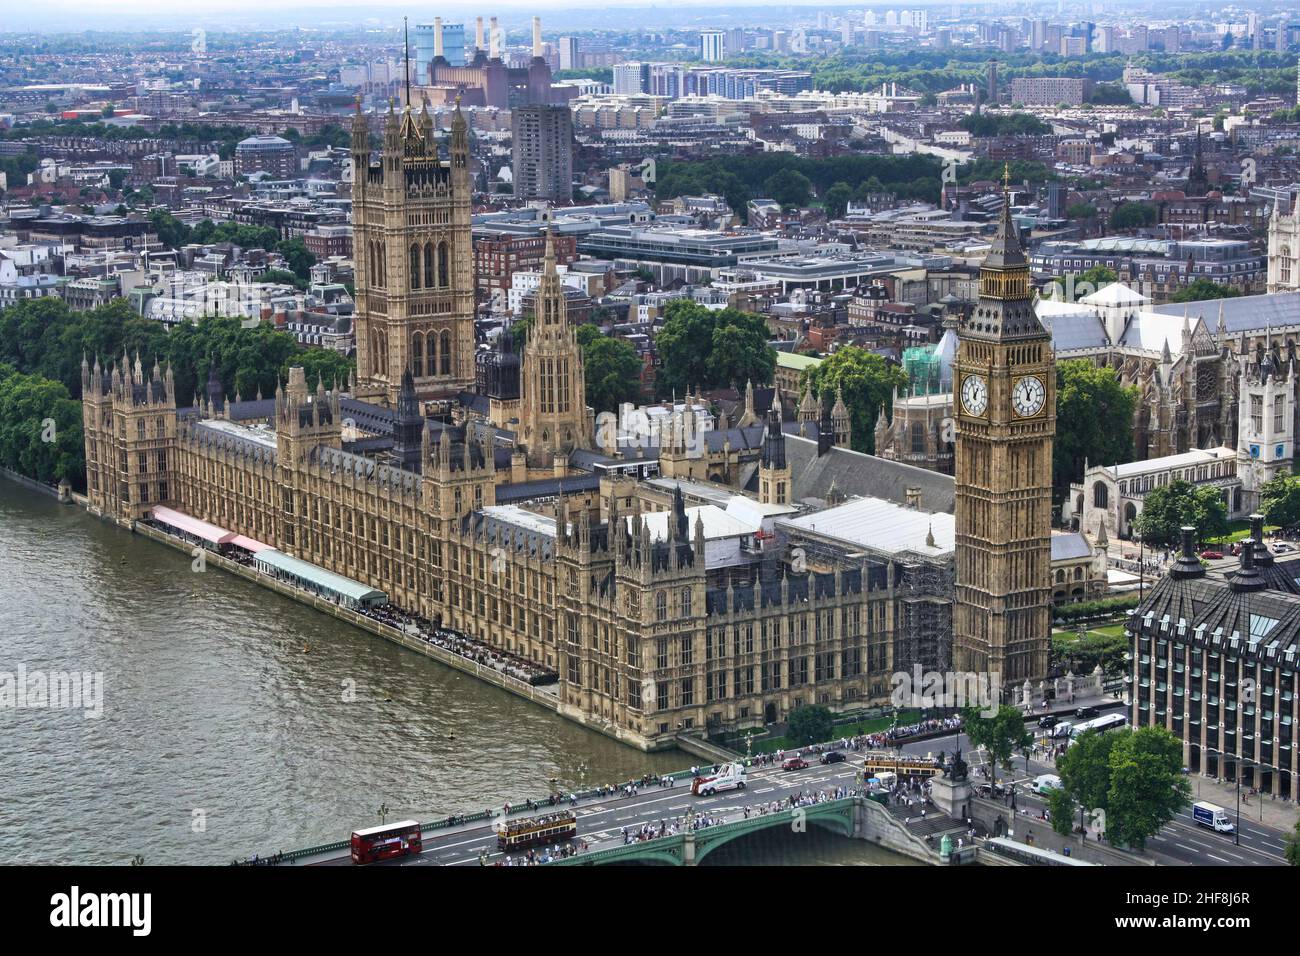 The famous Big ben clock tower, London UK Stock Photo